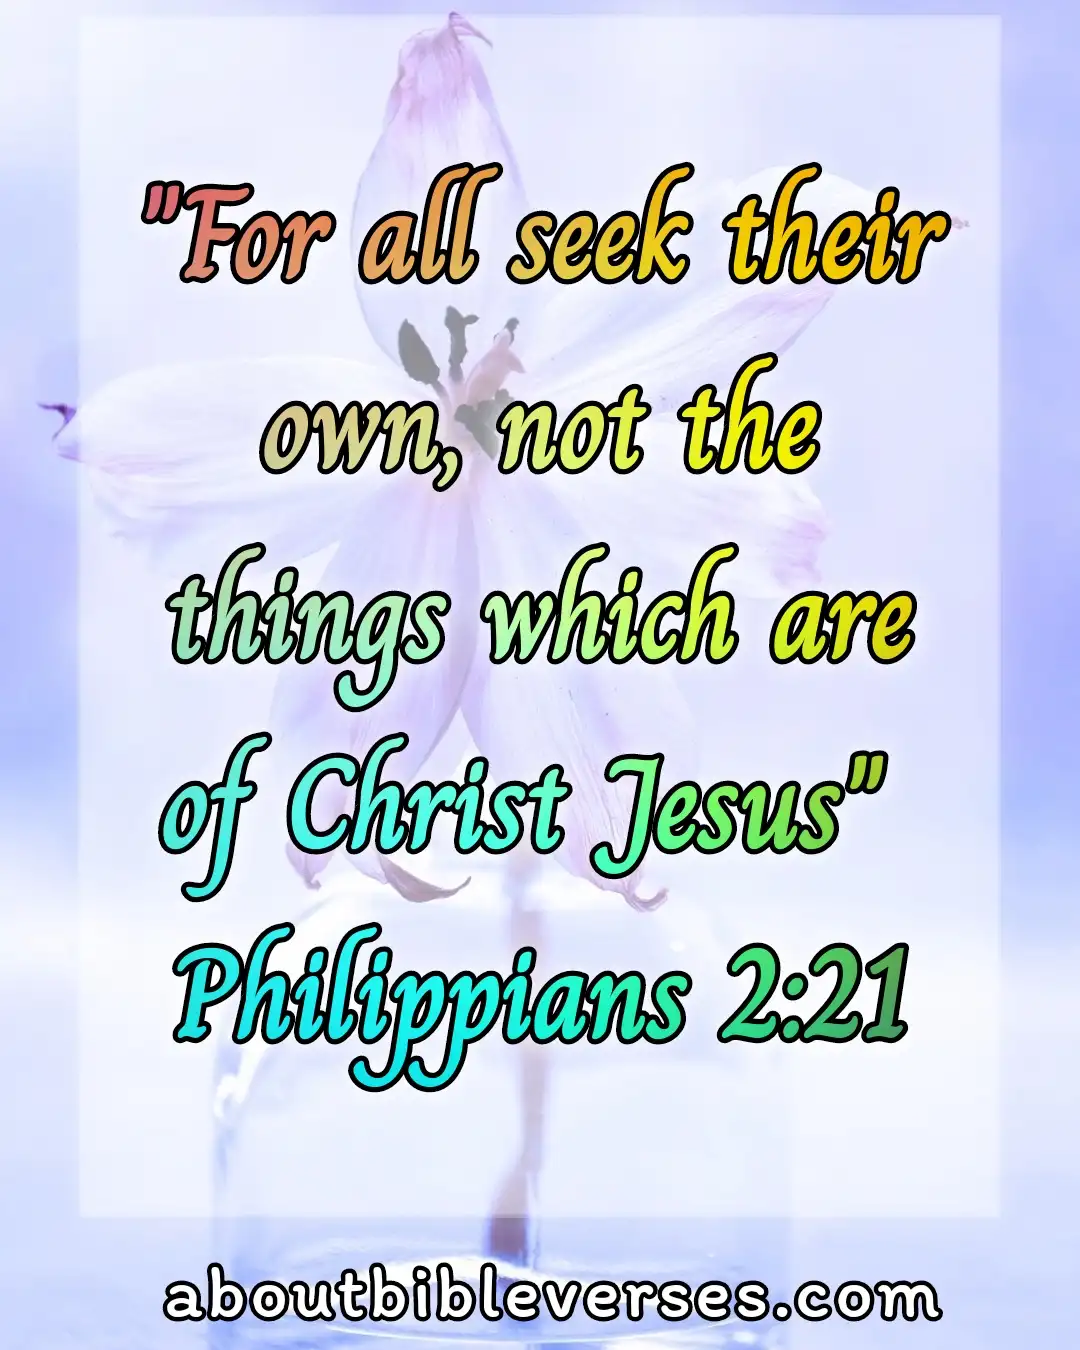 today Bible verse (Philippians 2:21)